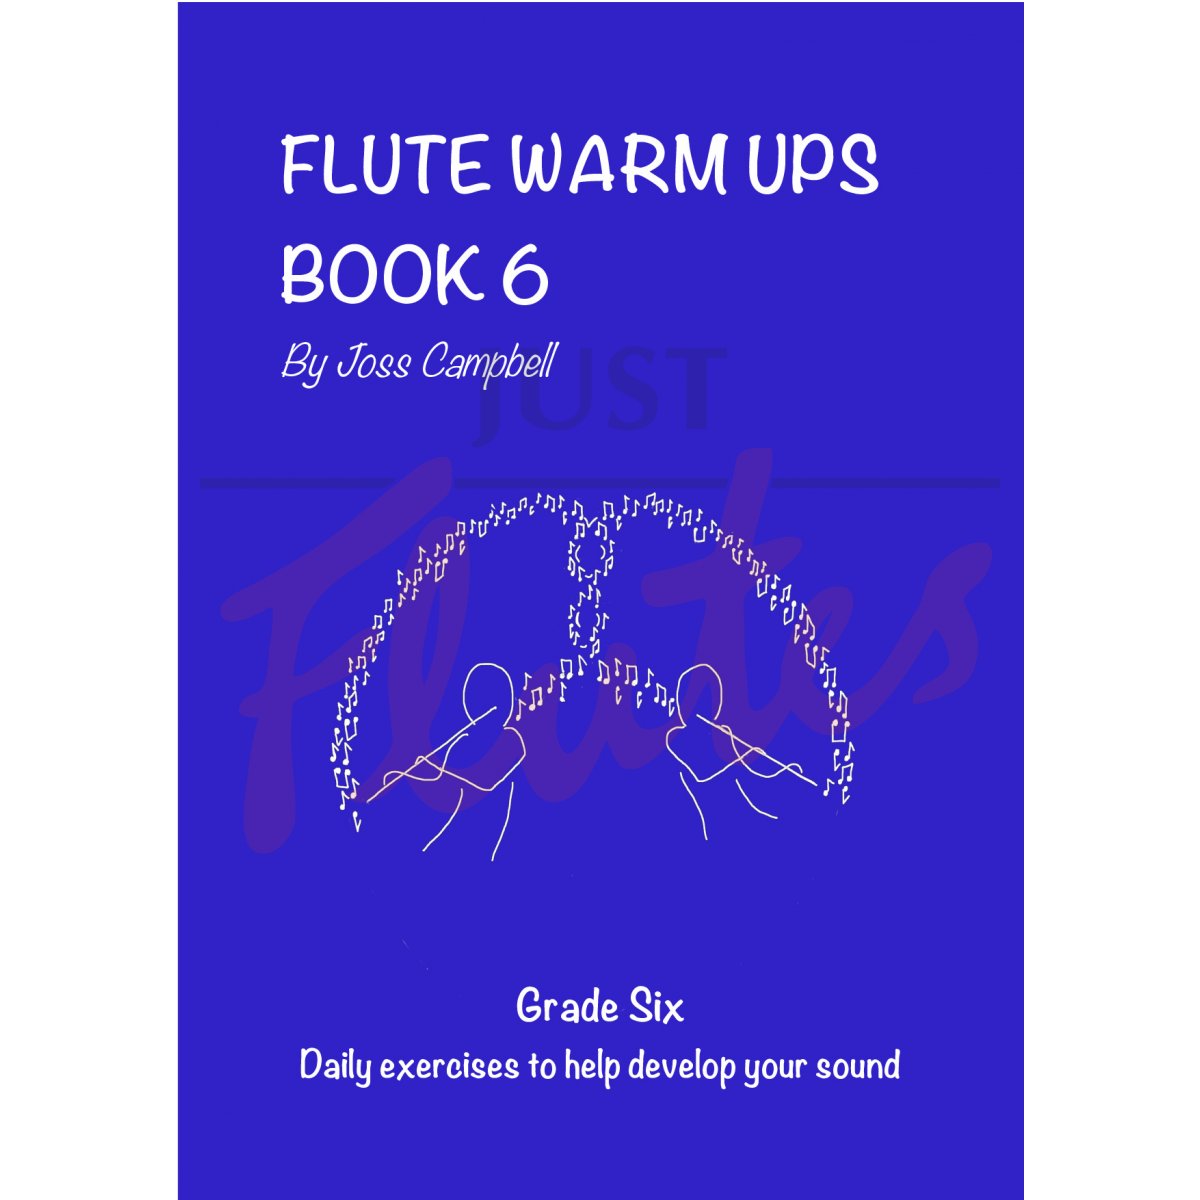 Flute Warm Ups Book 6